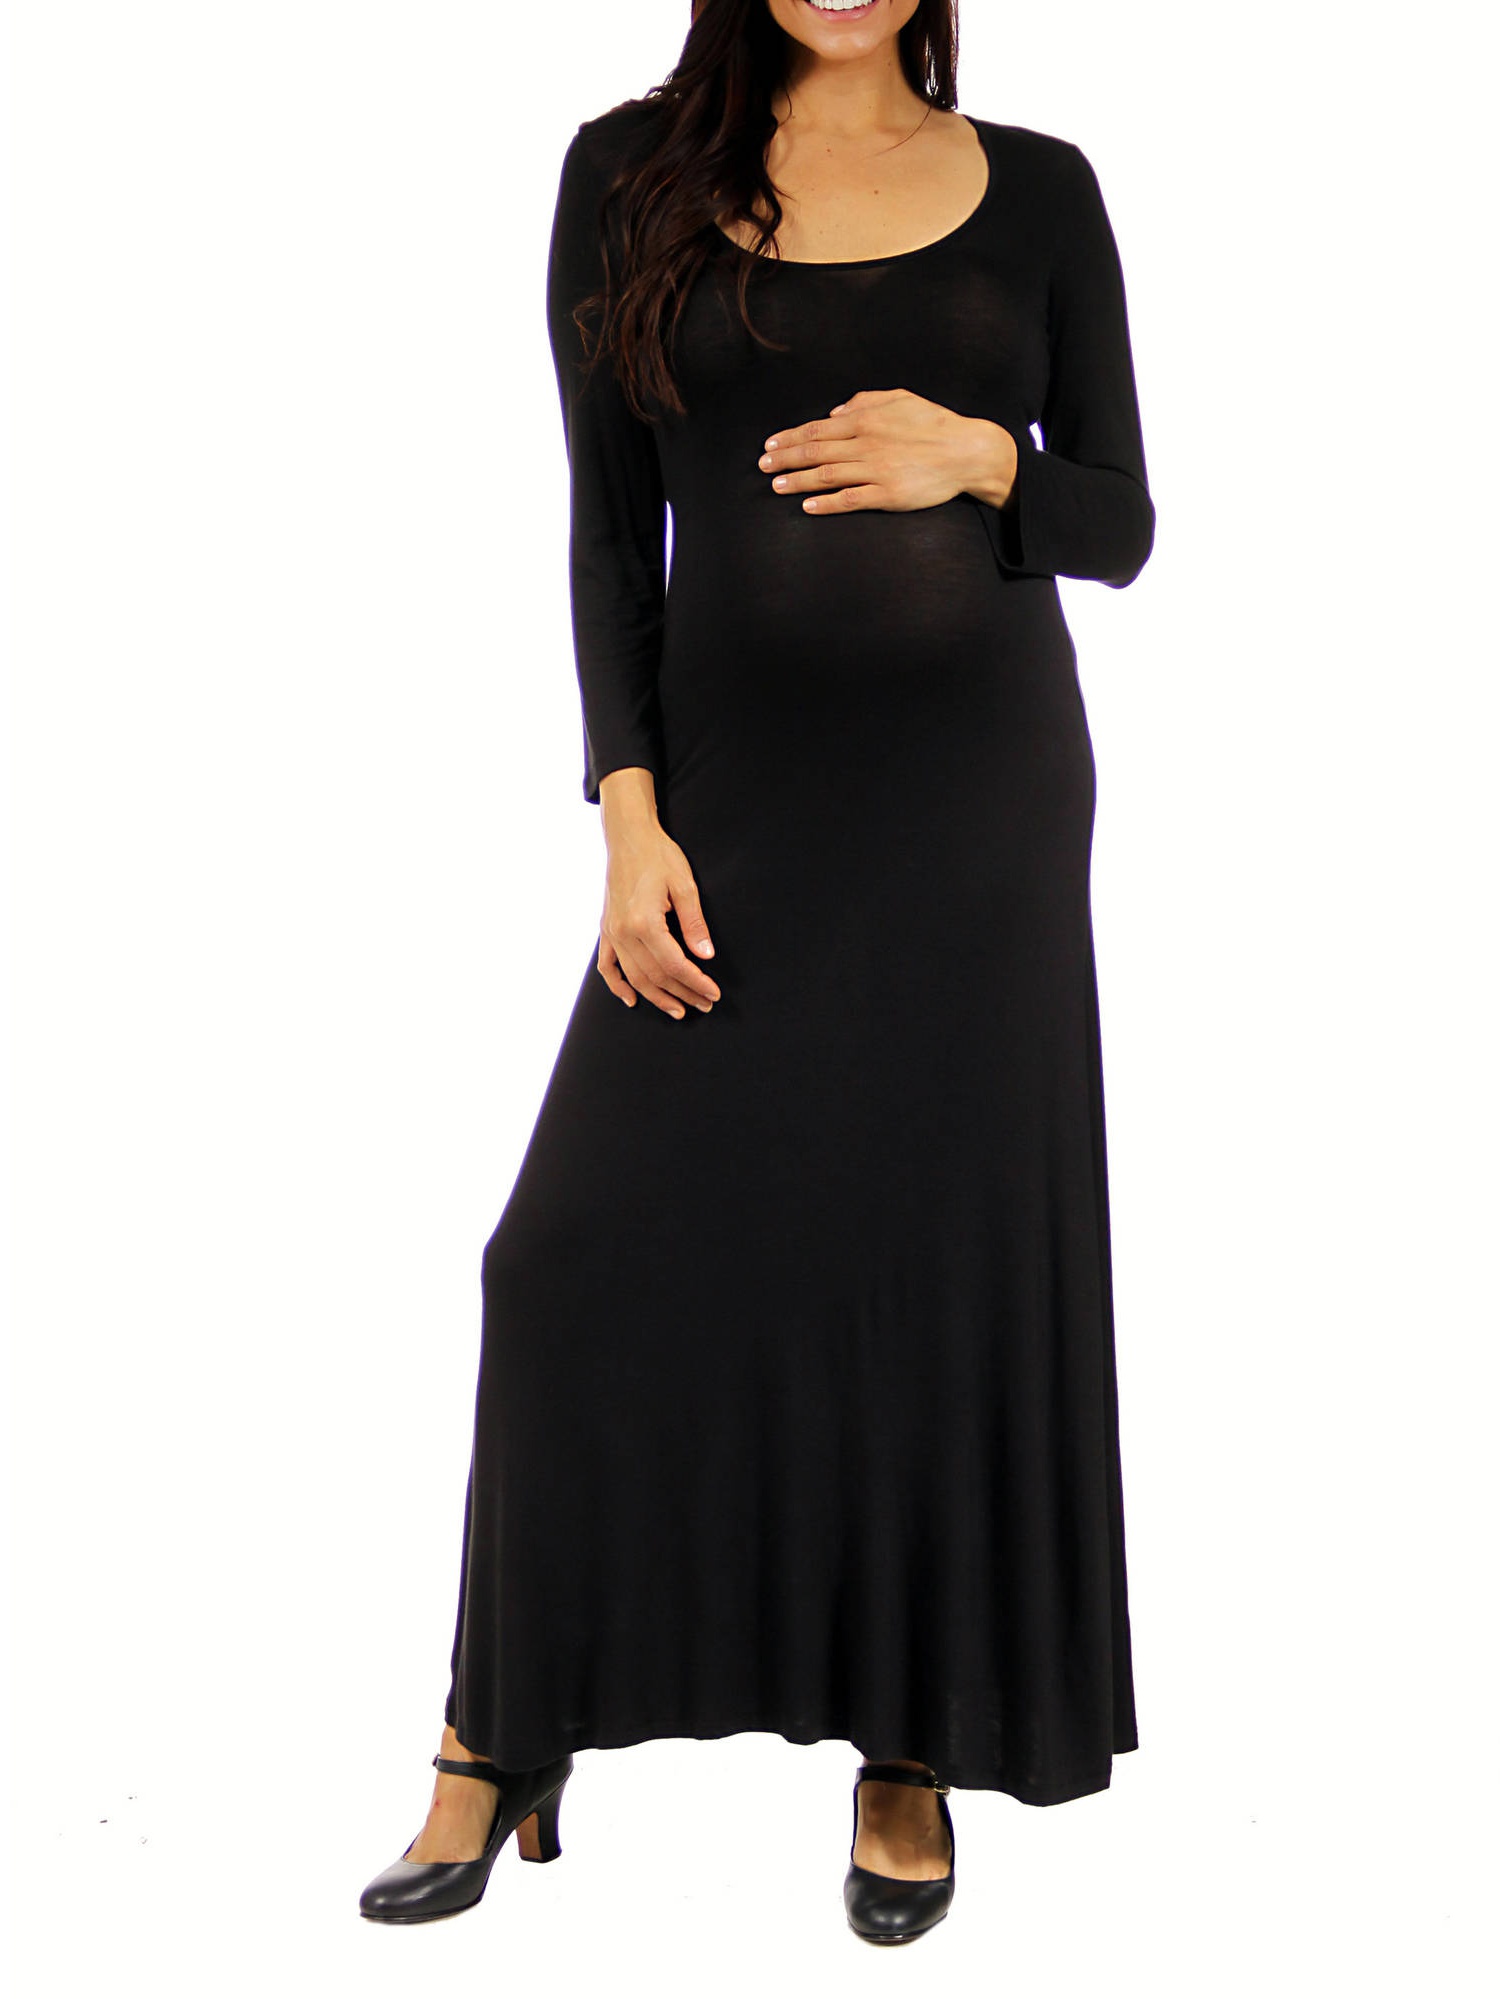 Women's Maternity Long Sleeve Scoop Neck Maxi Dress - image 1 of 4